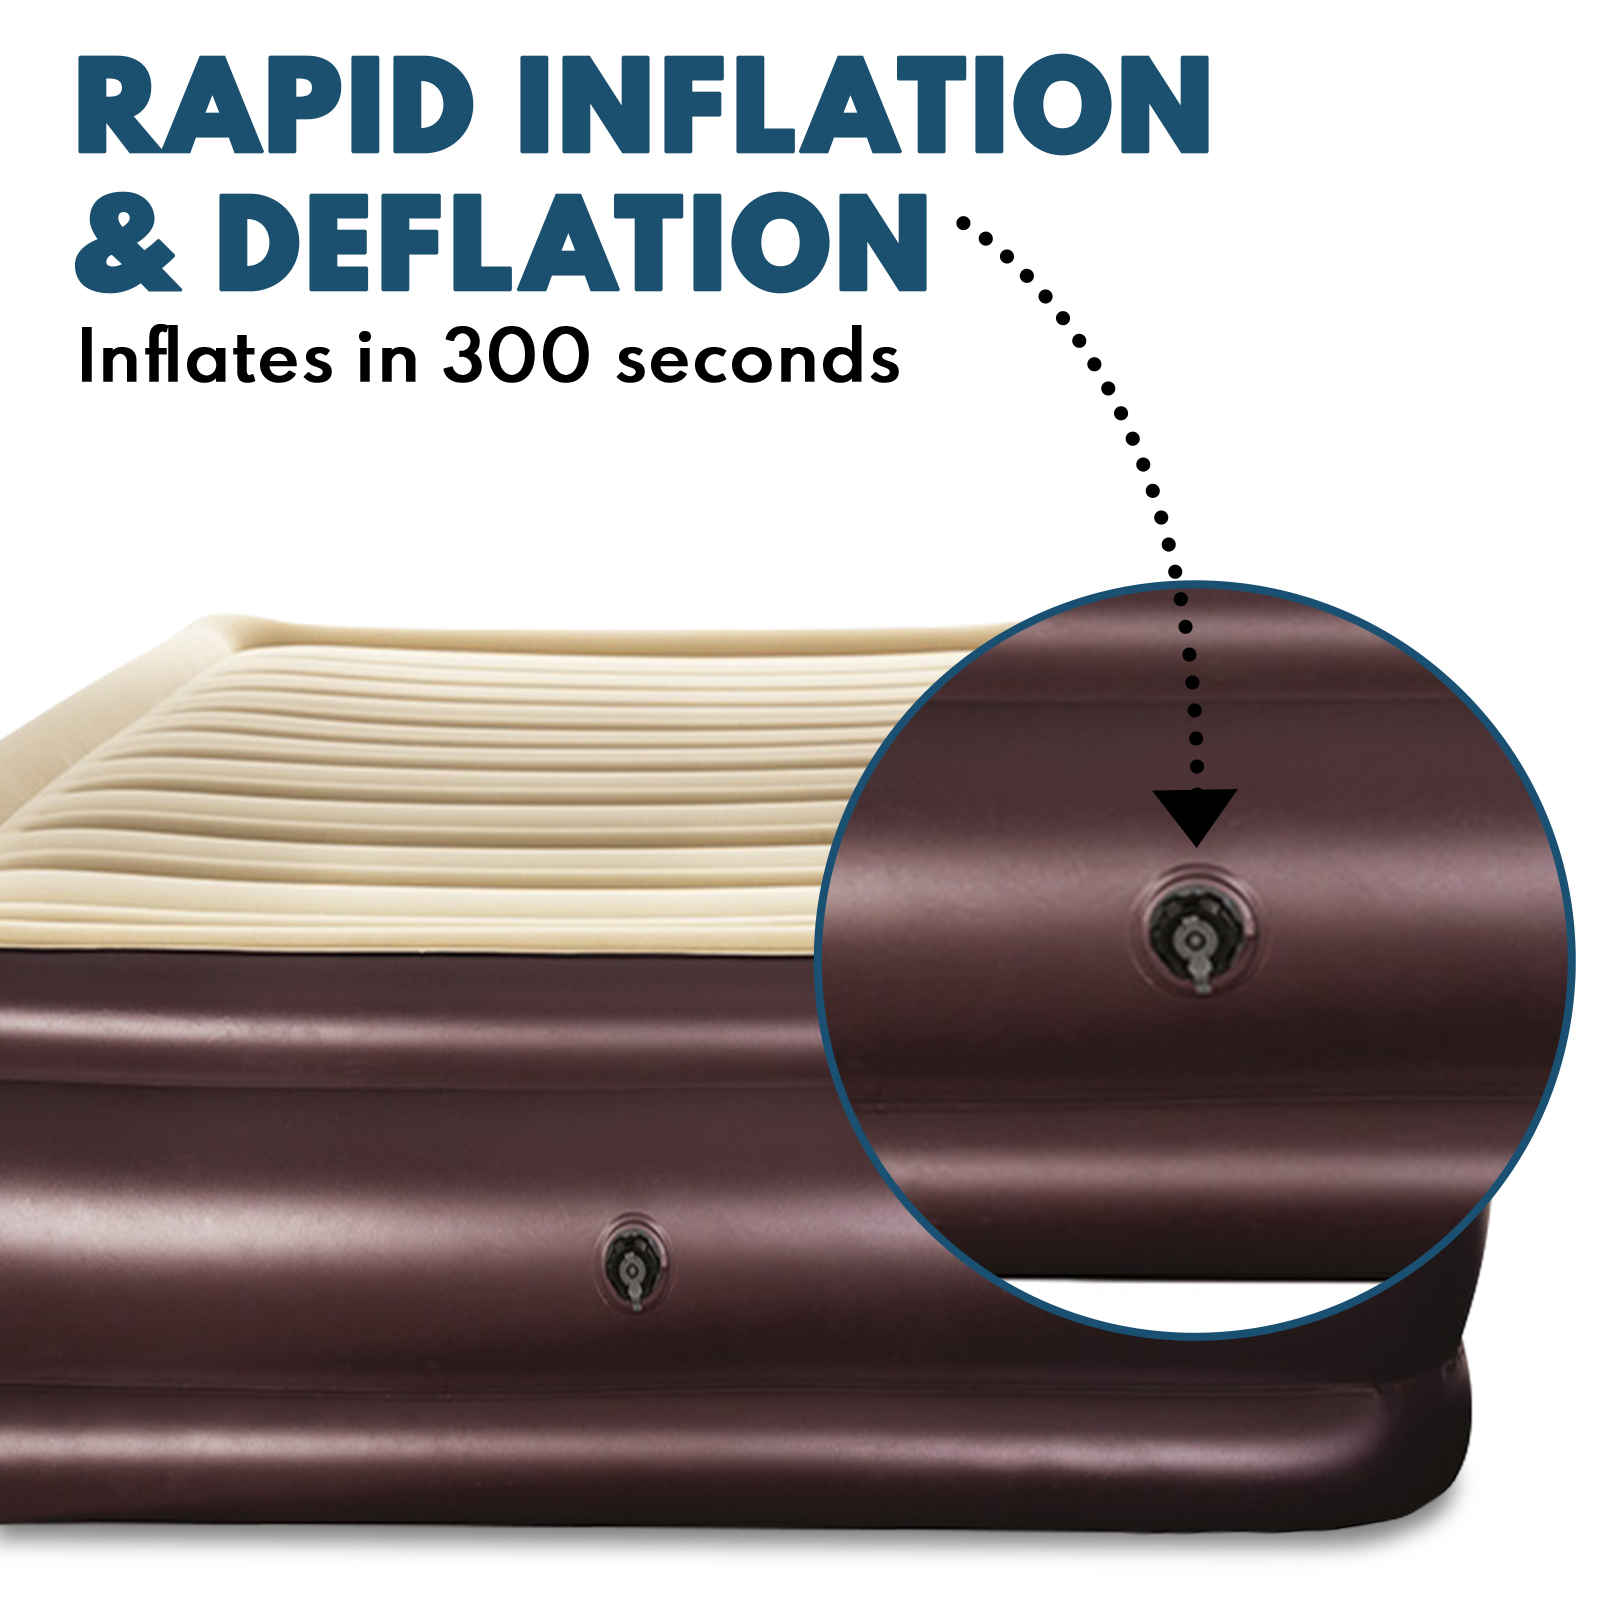 Queen Size Air Bed Inflatable Mattress Sleeping Mat 43CM Thick - Brown